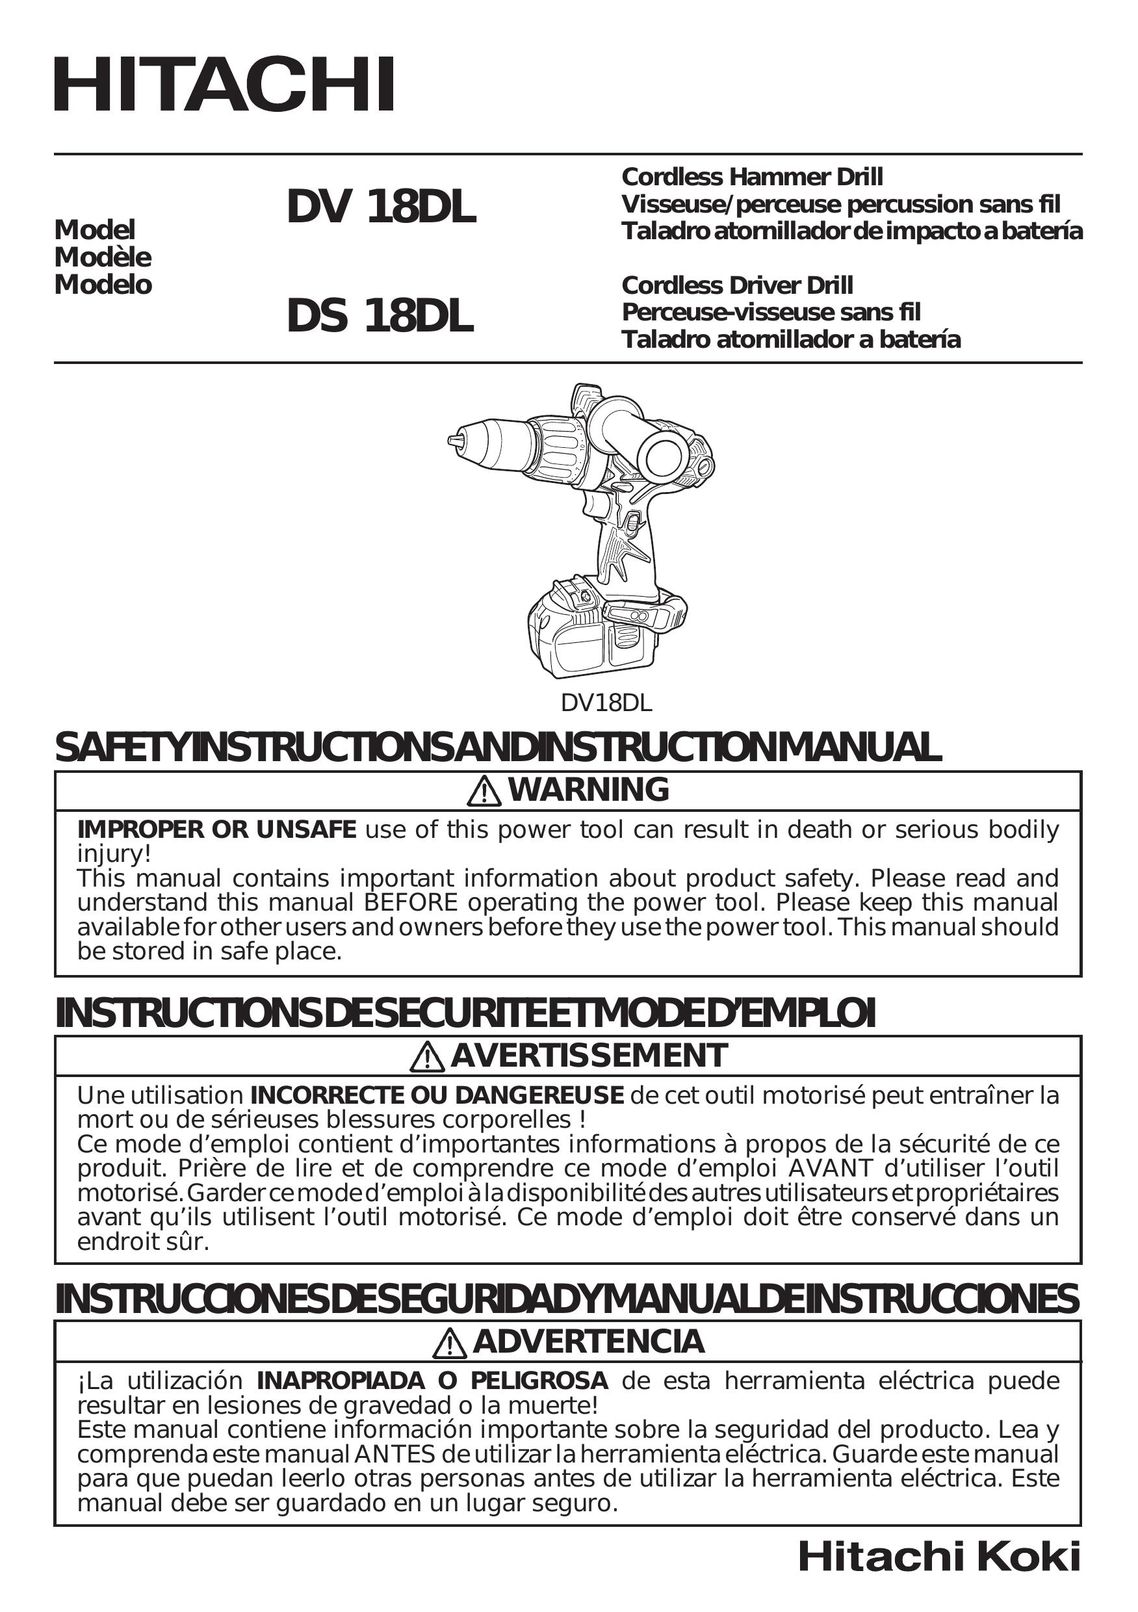 Hitachi DS 18DL Cordless Drill User Manual